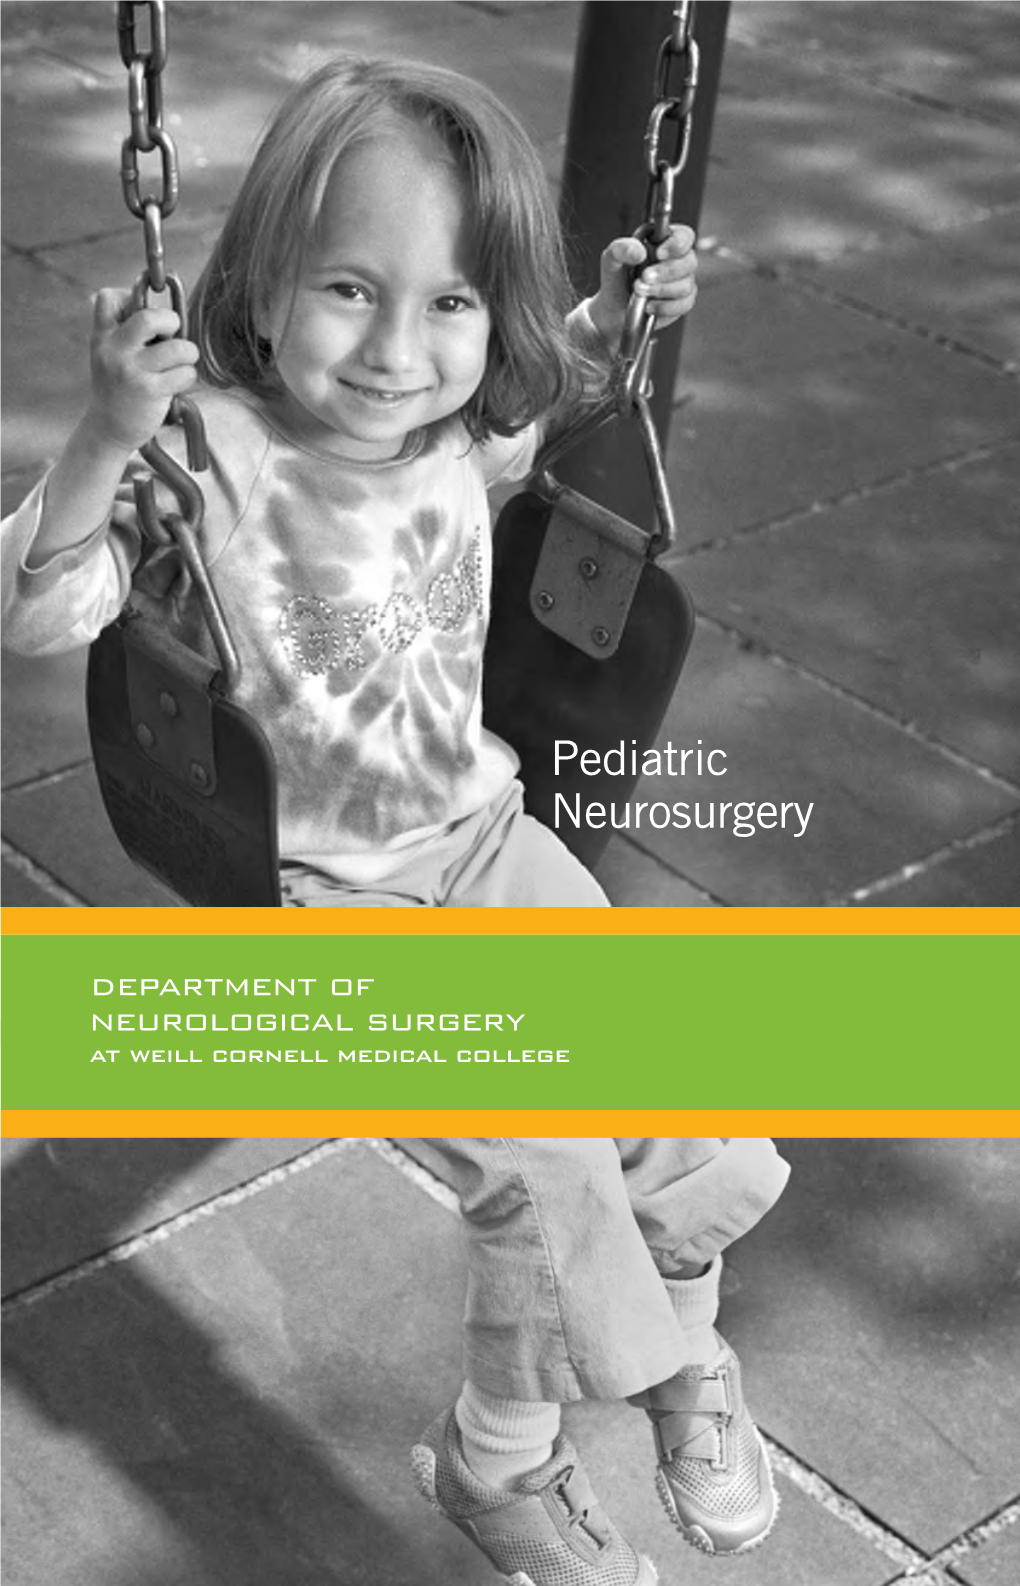 Pediatric Neurosurgery Program (PDF)